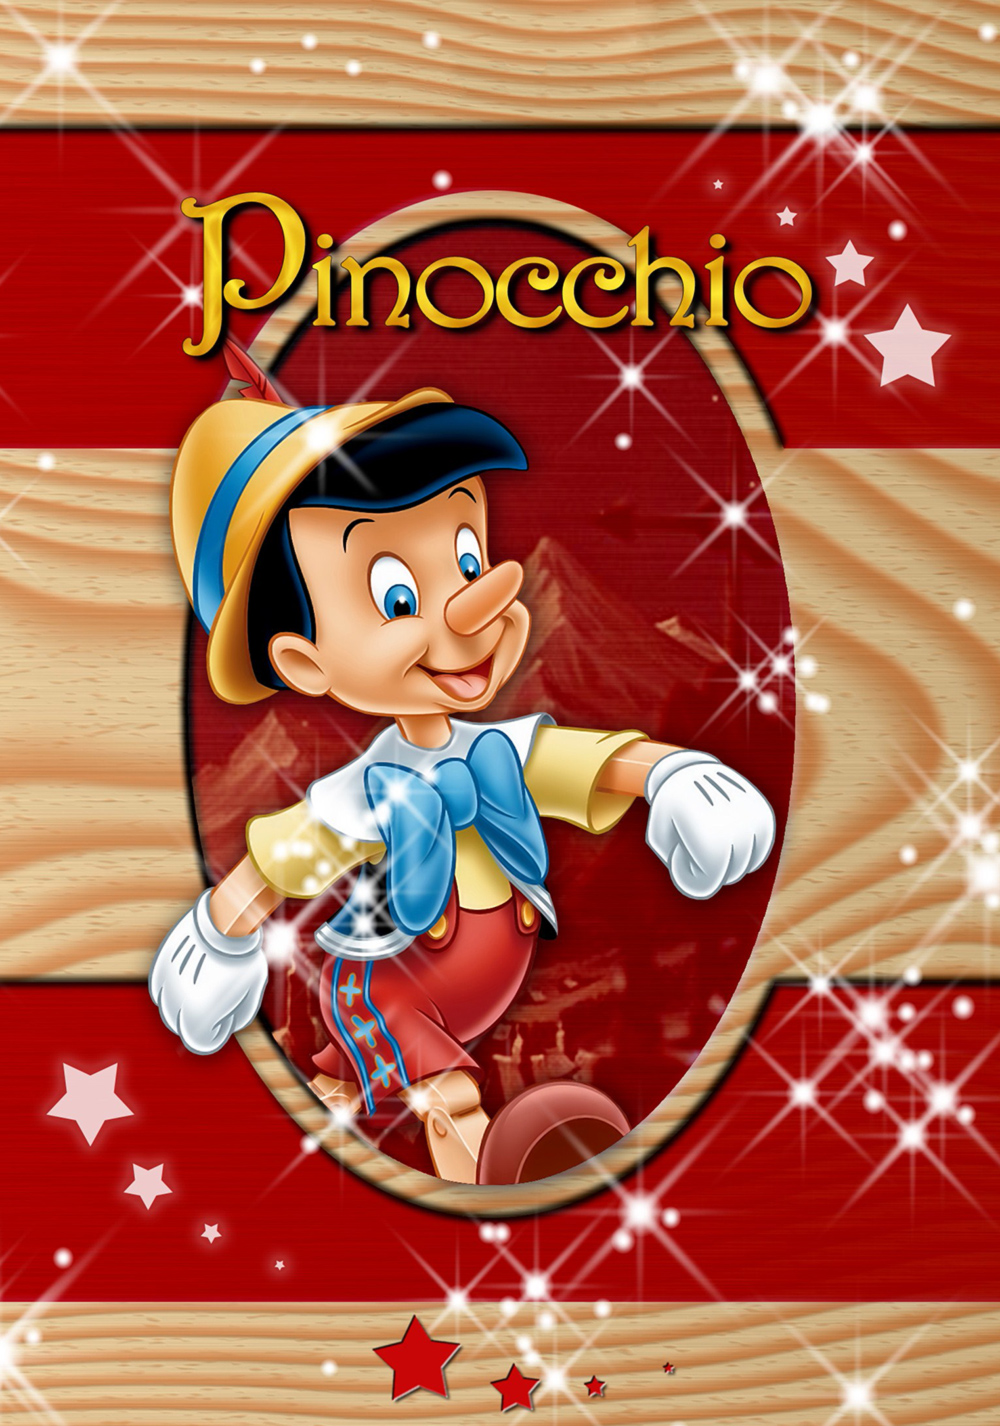 Pinocchio (1940) Art